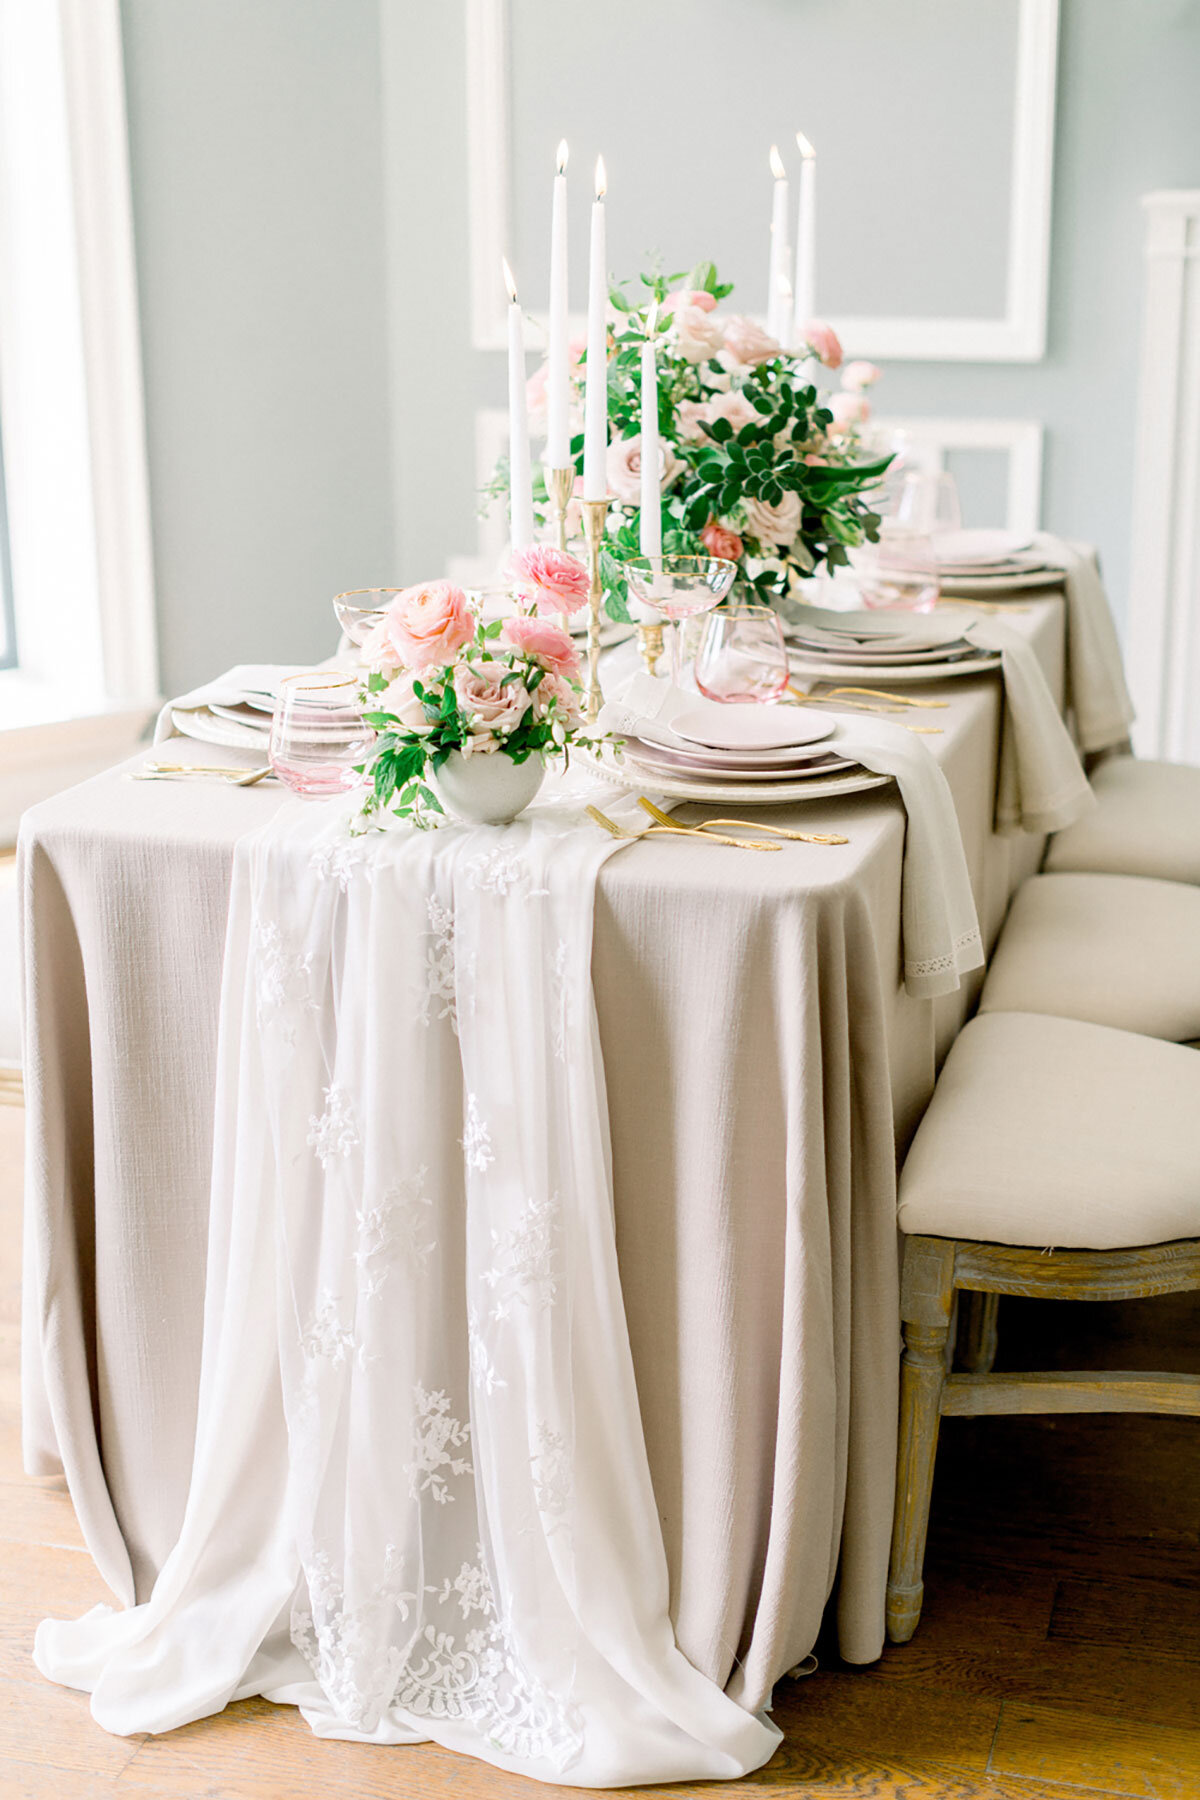 Sue-Gallo-Designs-Wedding-Florist-in-Southern-Ontario-Vineyard-Bride-The-Swish-List-0009.JPG